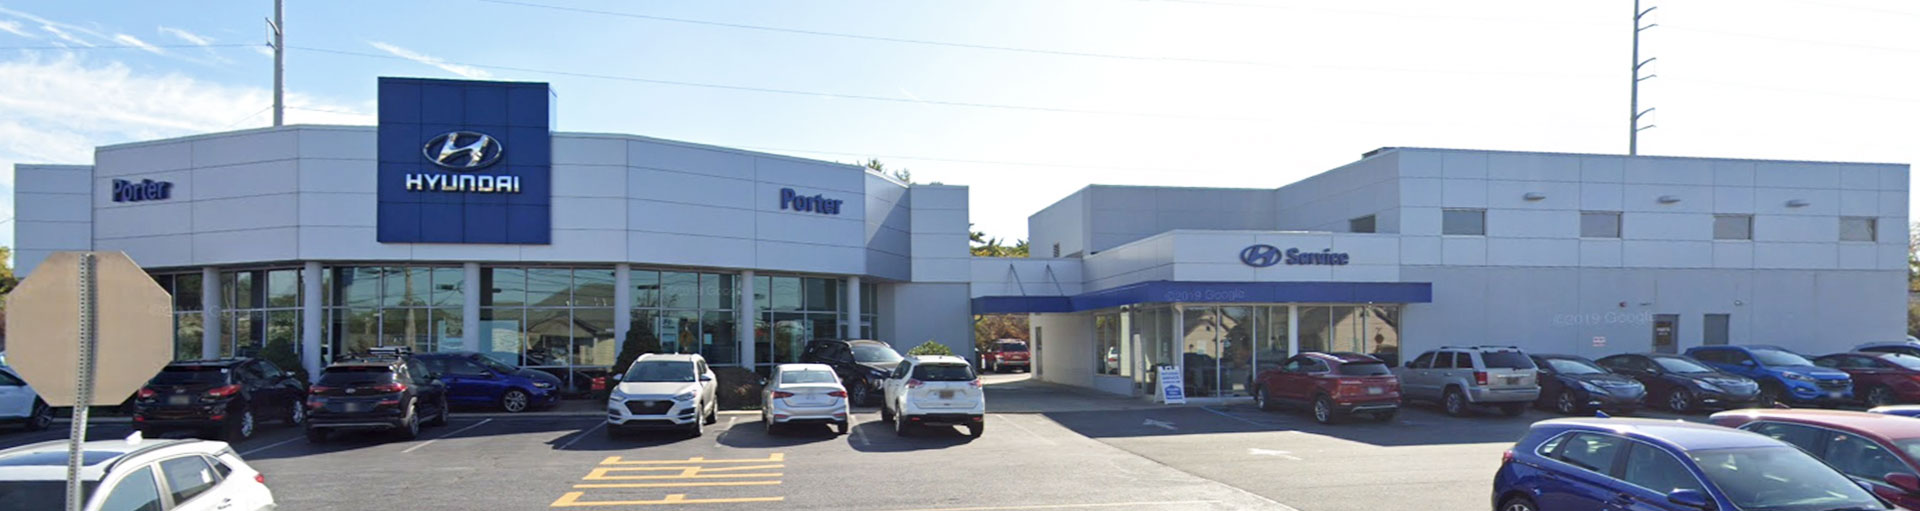 Porter Hyundai Elkton, MD Service & Repair